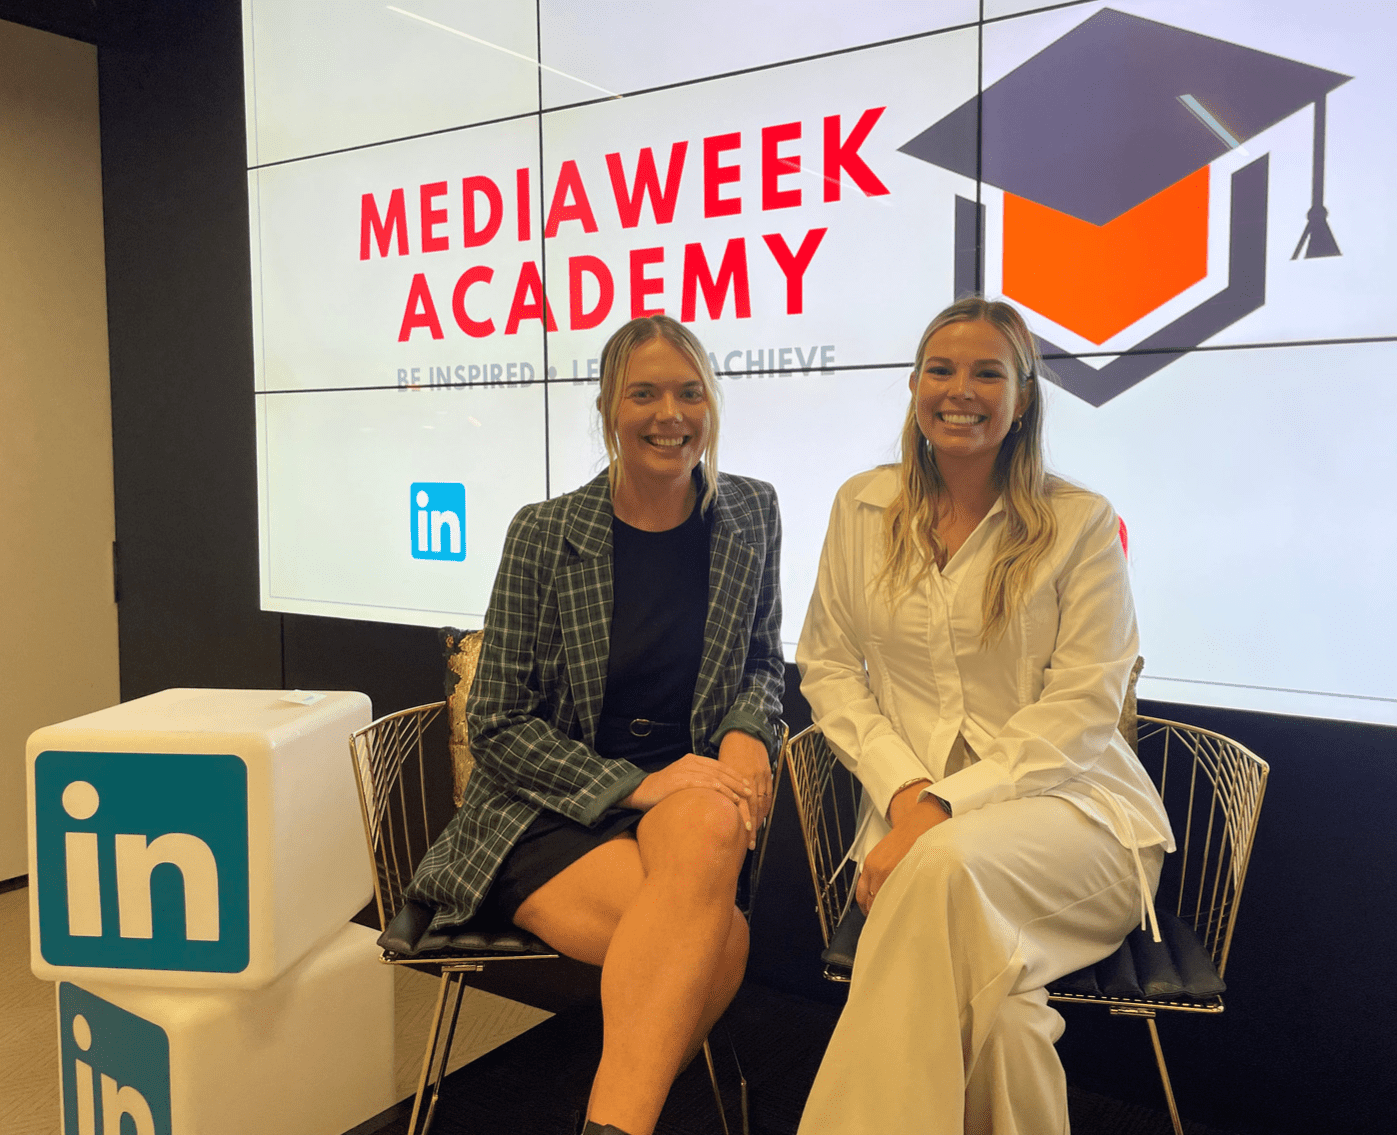 Mediaweek Academy